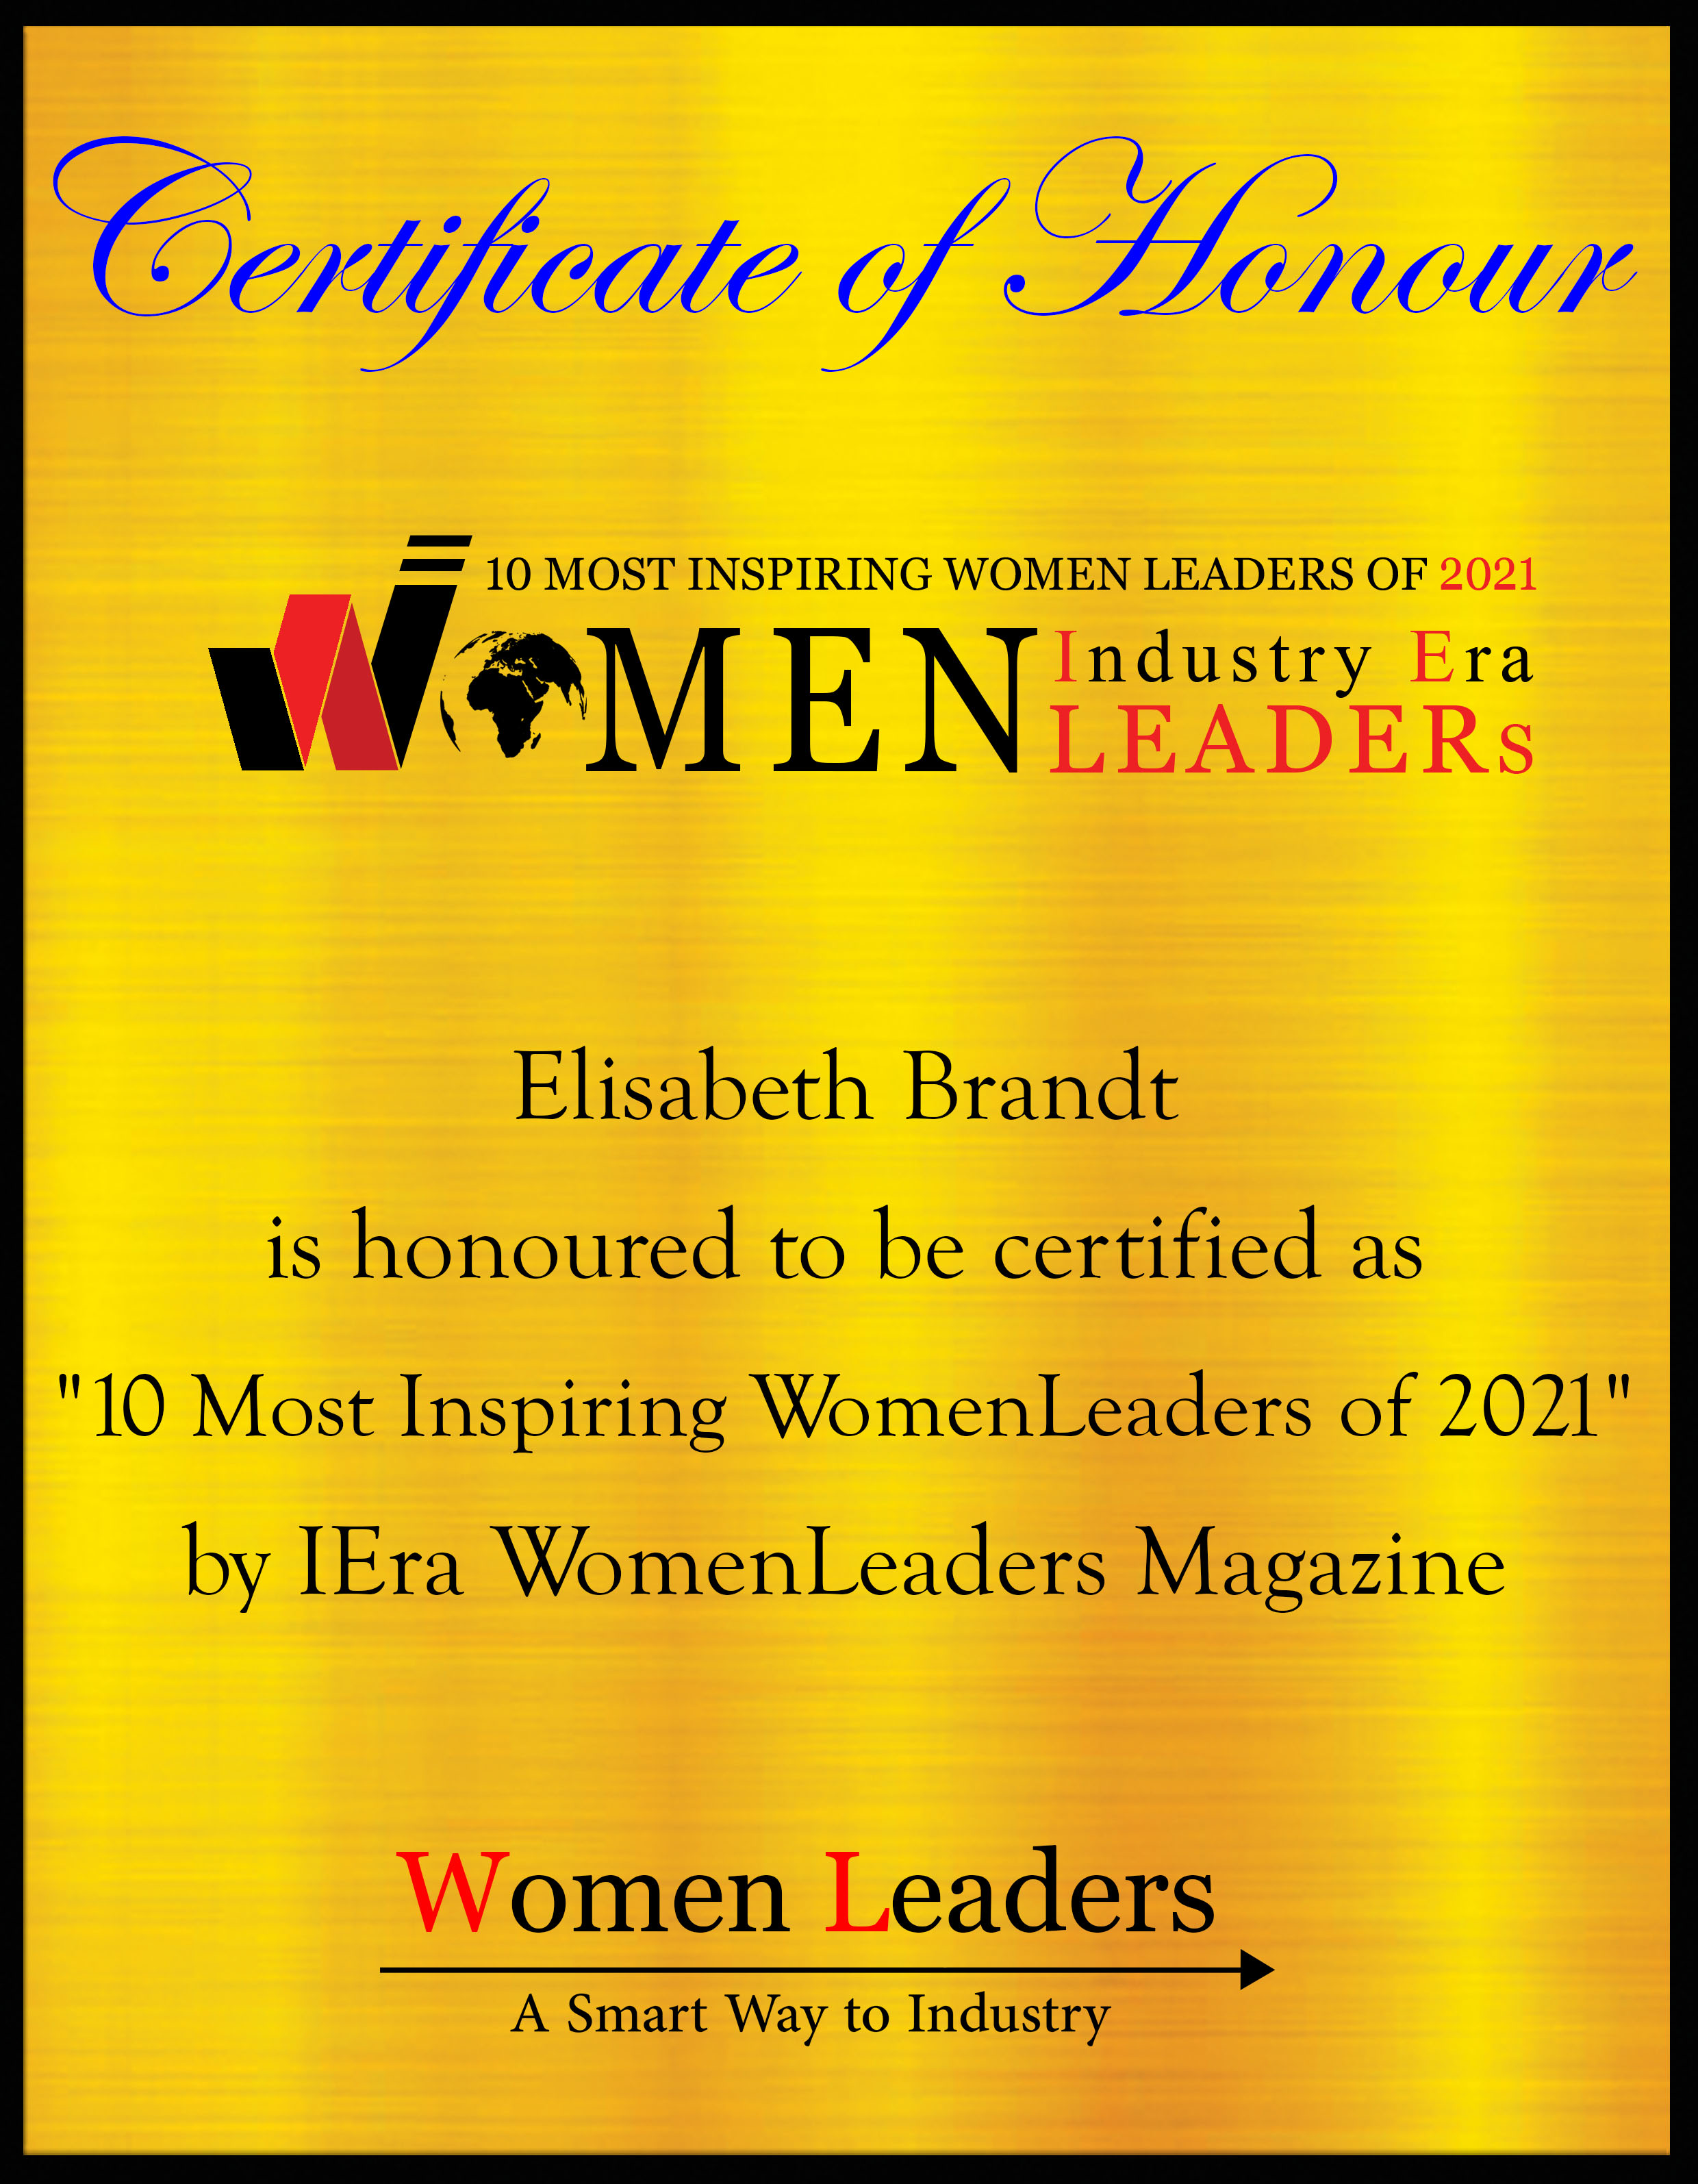 Elisabeth Brandt, Founder & CEO of Healing Earth, Most Inspiring WomenLeaders of 2021